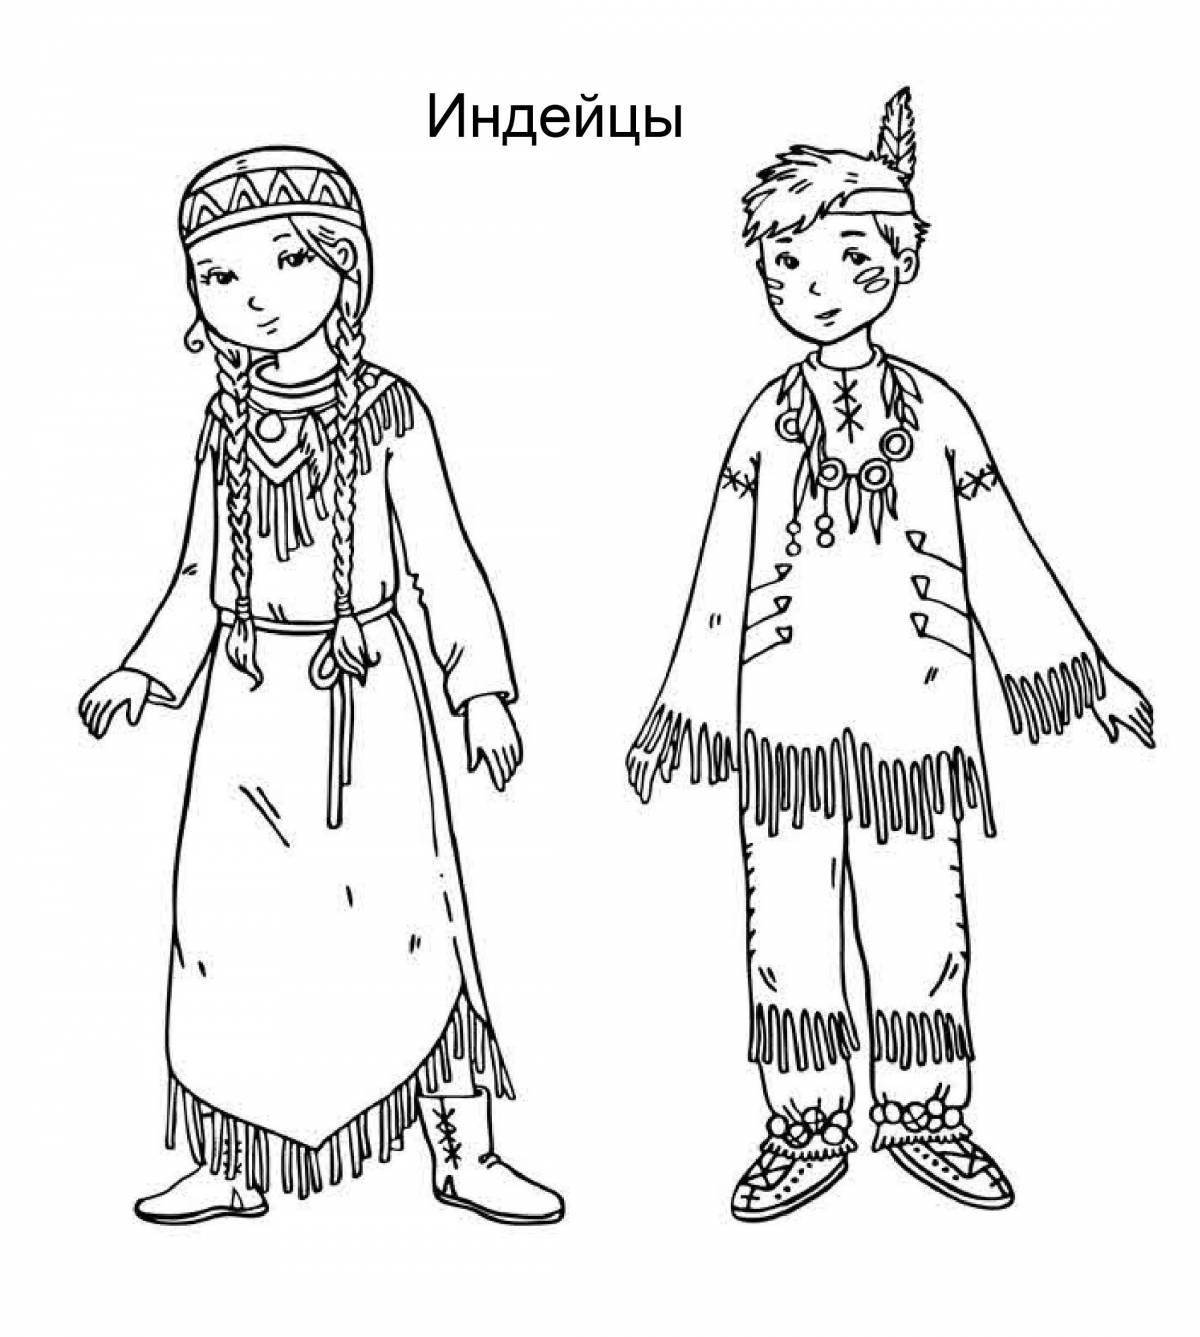 Royal Chuvash national costume for children